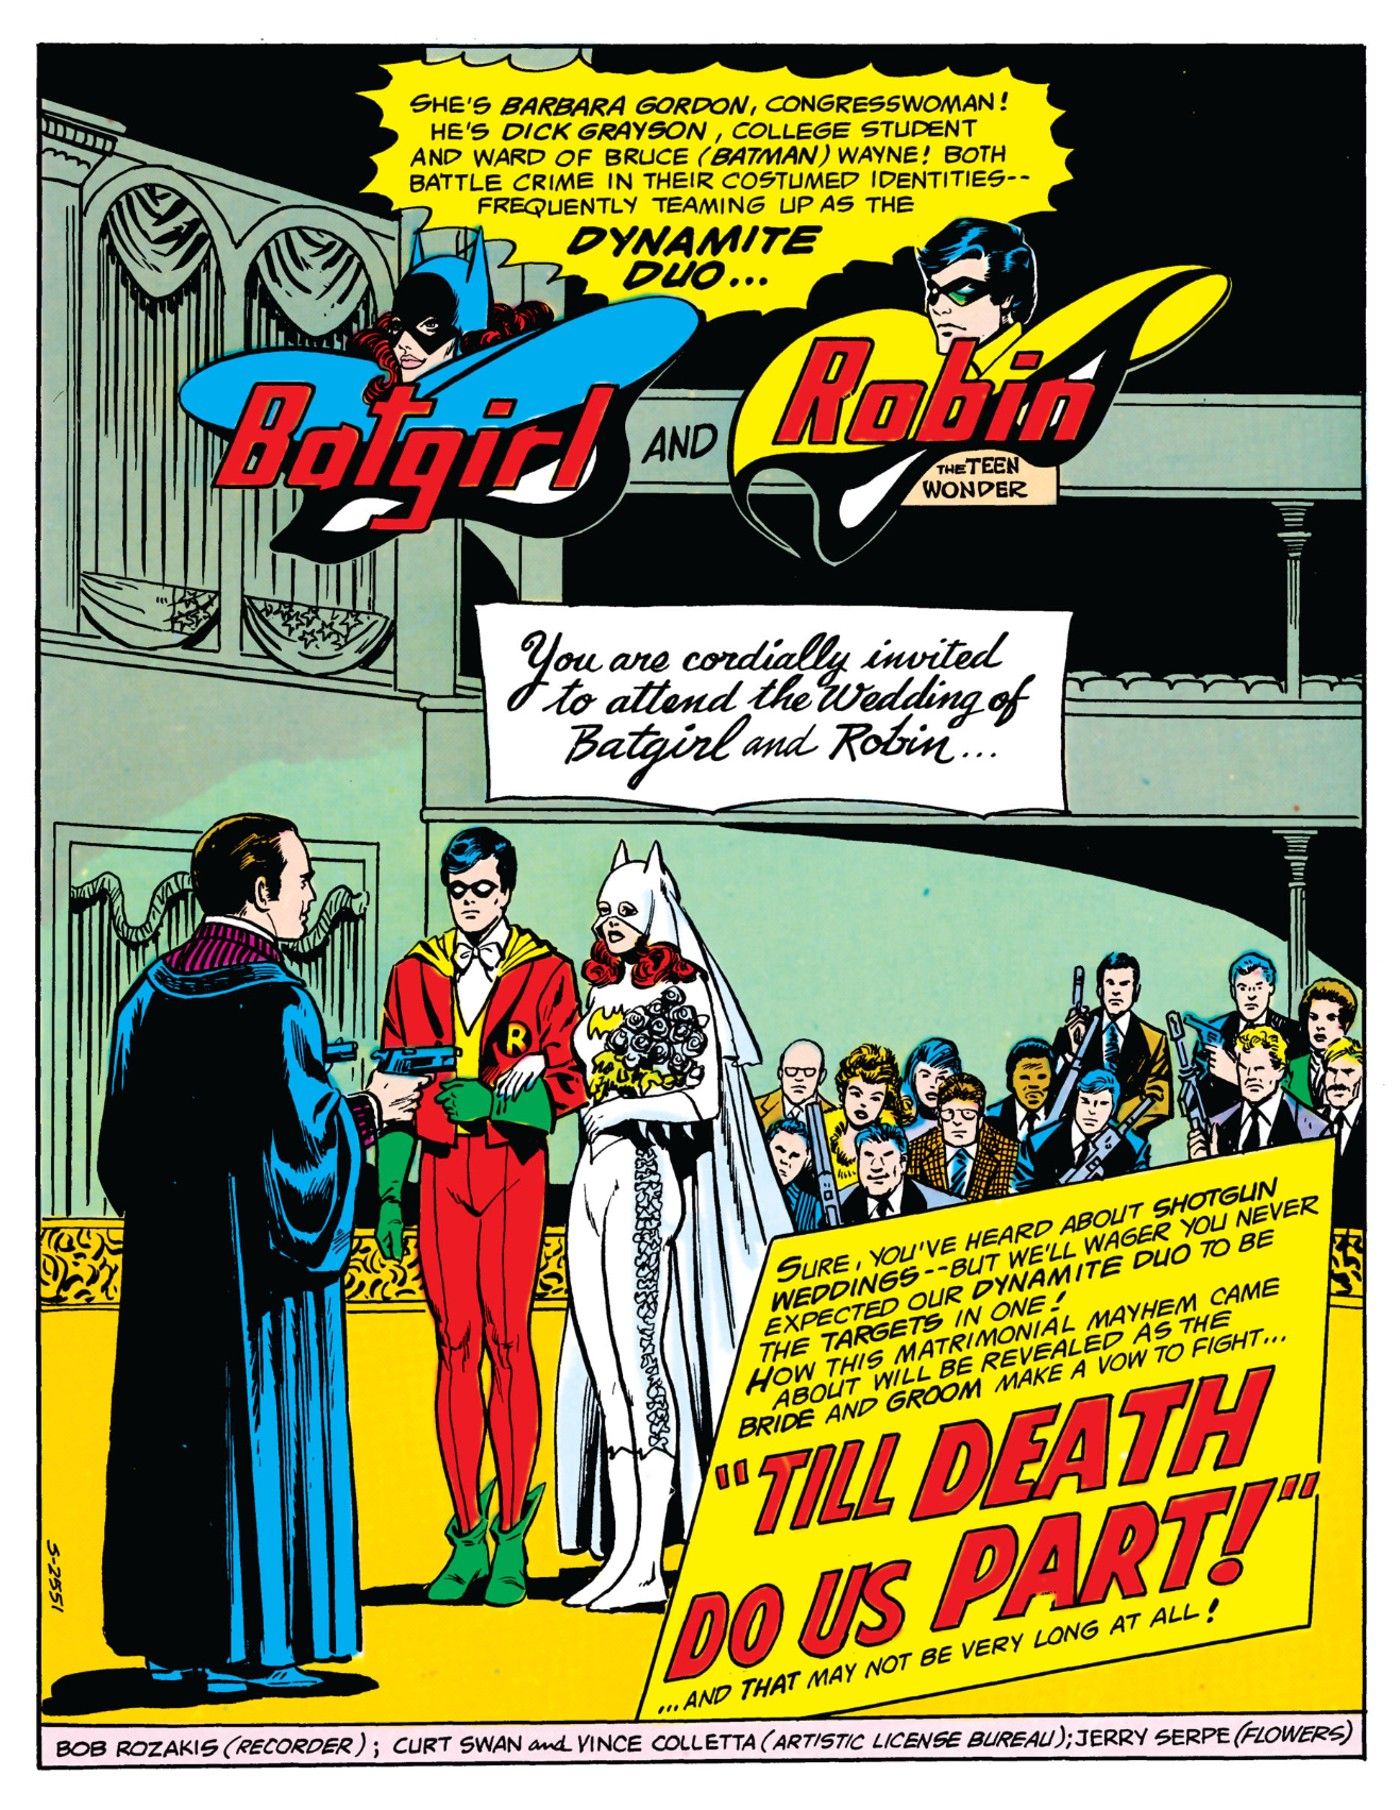 Roupas de casamento com tema de fantasia de Batgirl-Robin